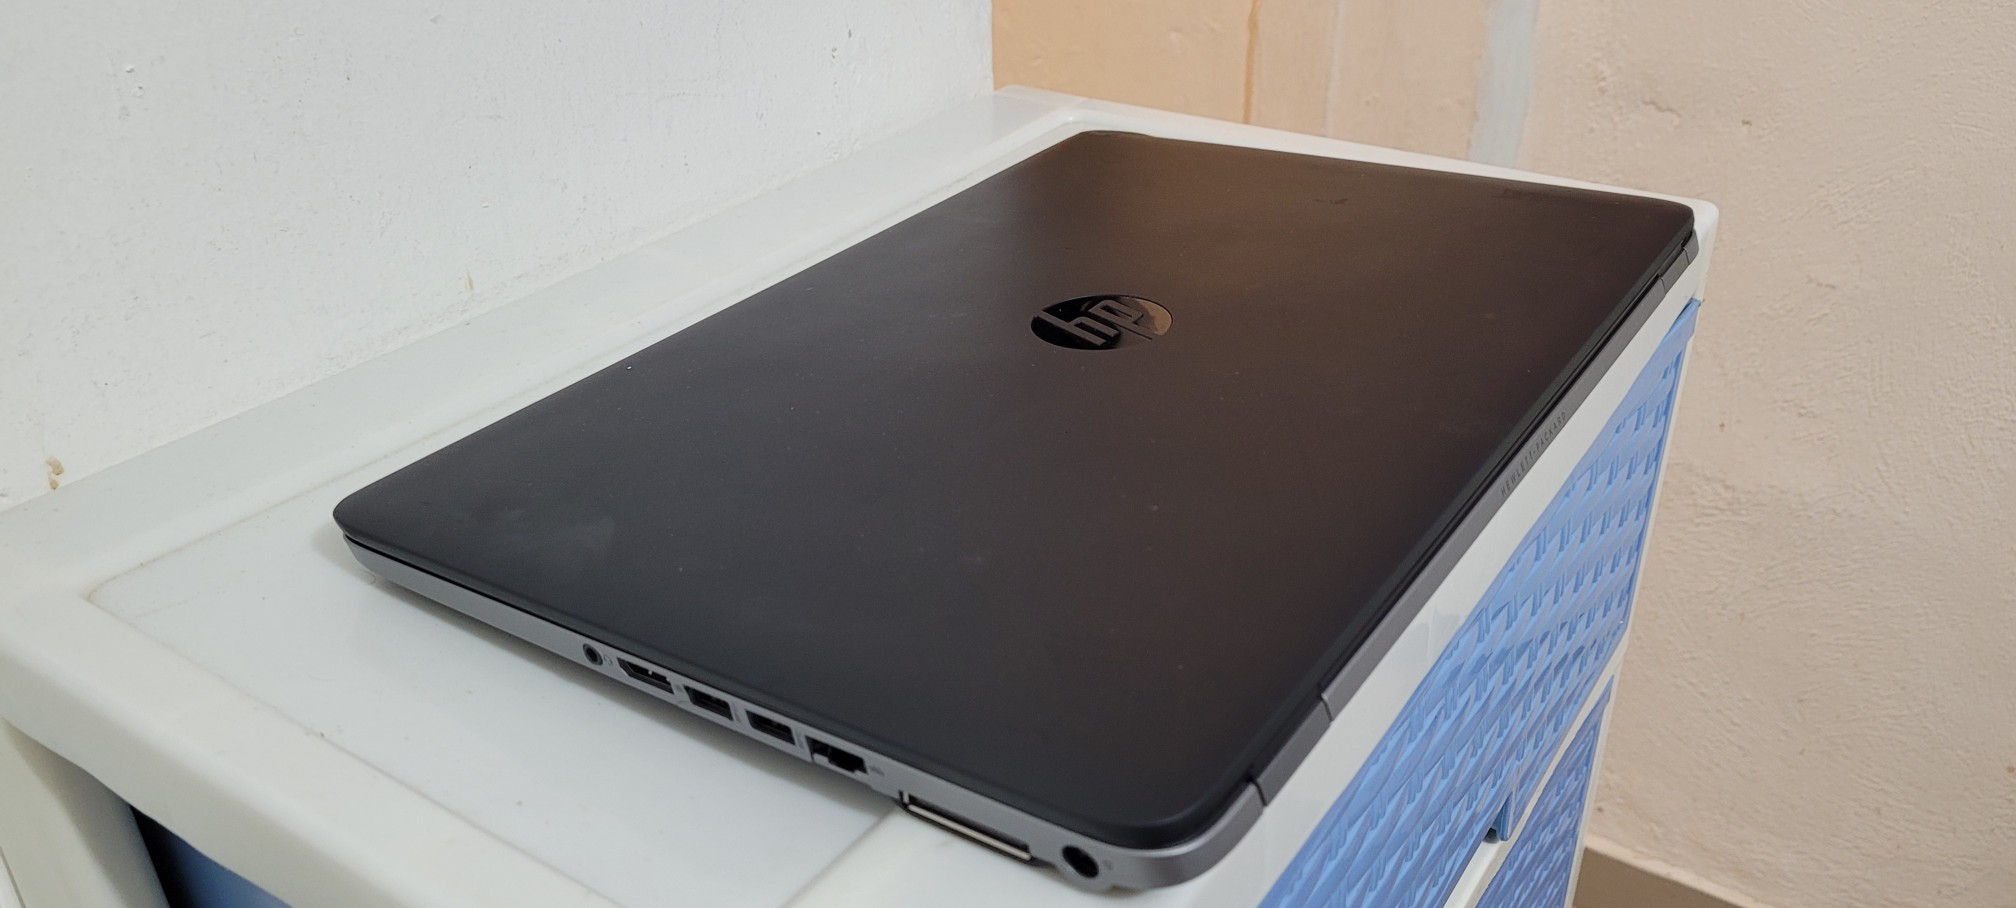 computadoras y laptops - laptop hp 650 17 Pulg Core i5 6ta Gen Ram 8gb ddr4 Disco 256gb SSD Wifi bluetoth 2